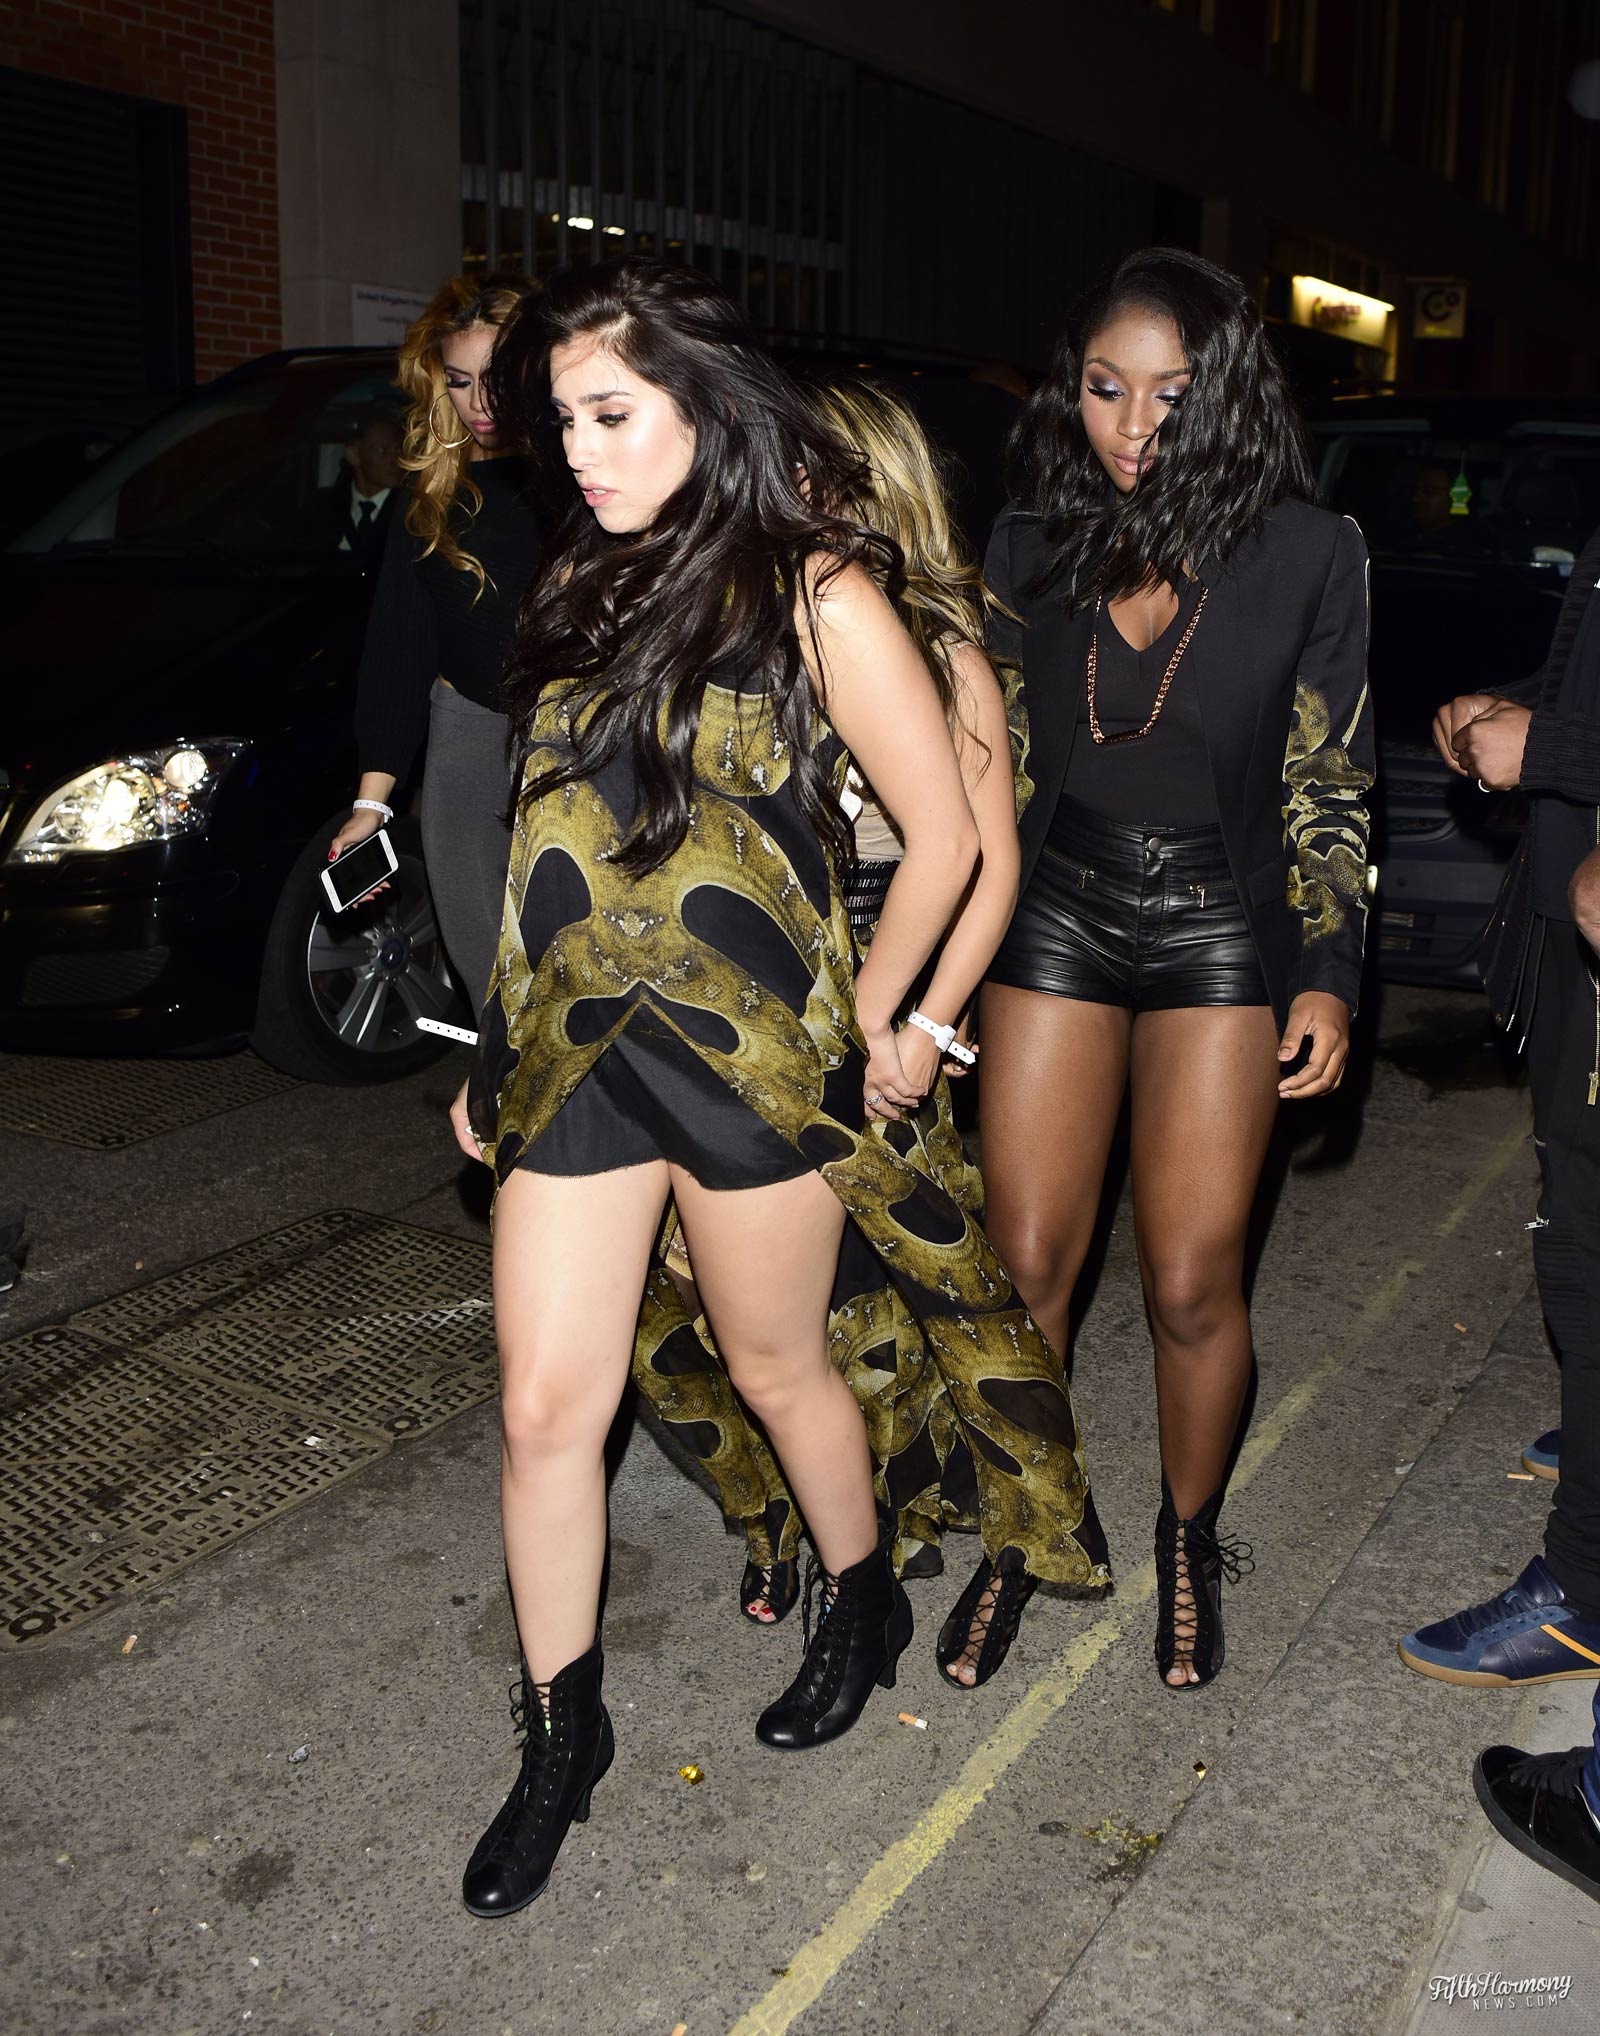 Fifth Harmony leaving Libertine nightclub